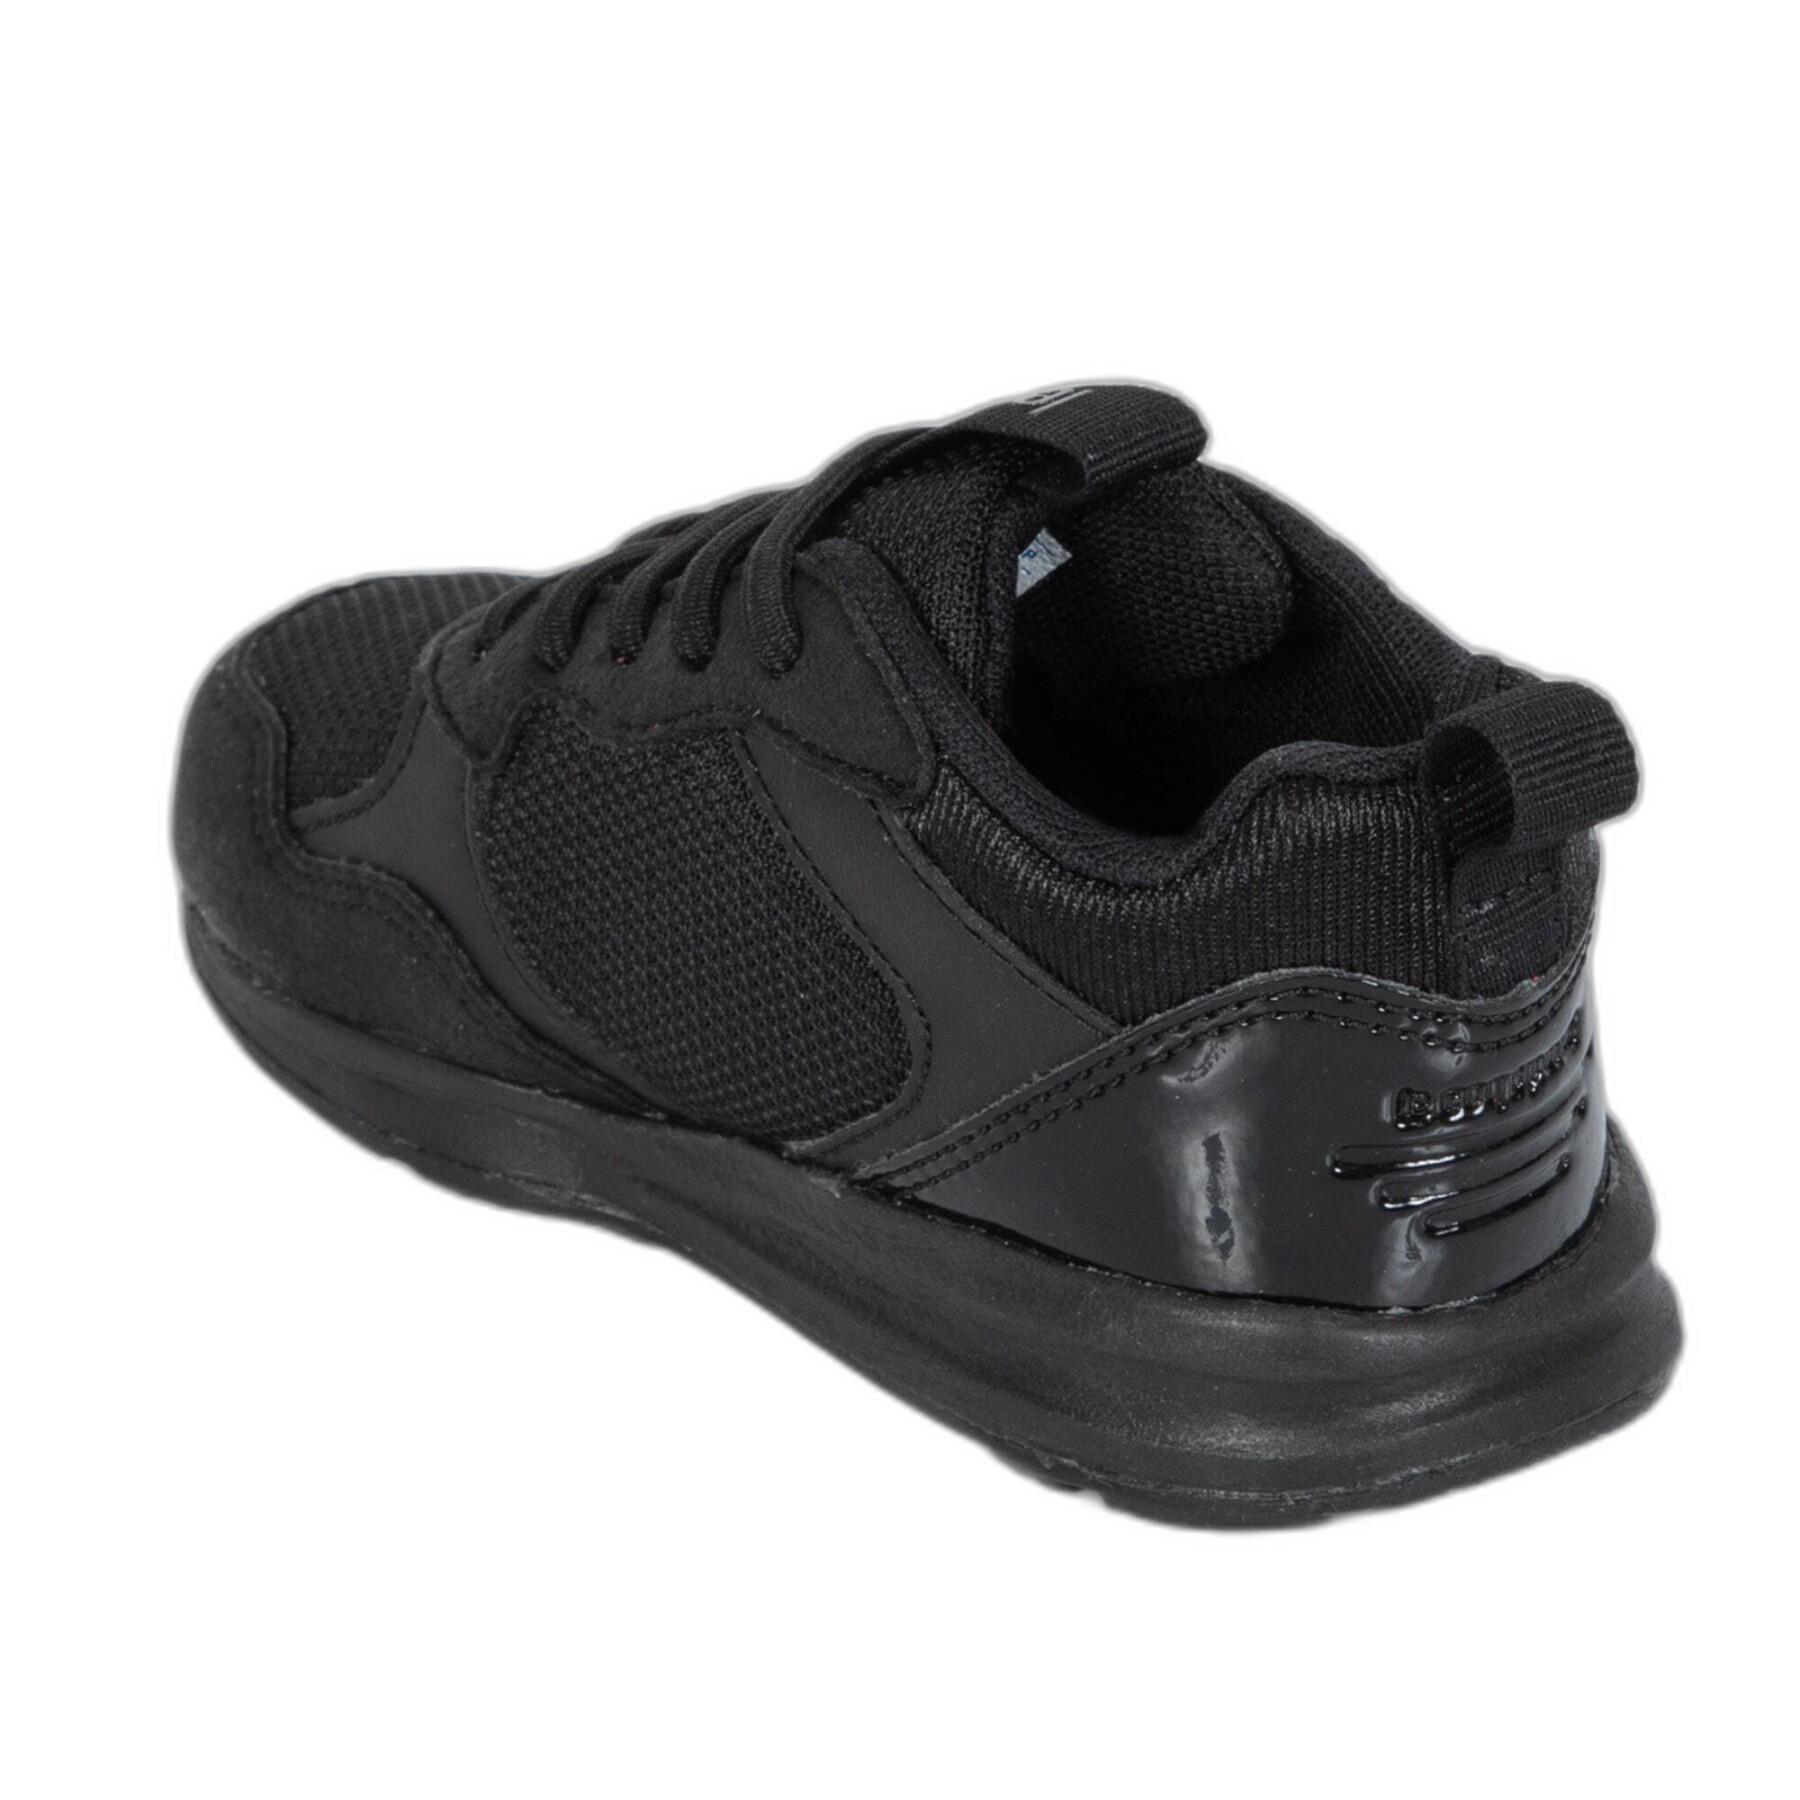 Children's sneakers Le Coq Sportif R500 Inf Sport